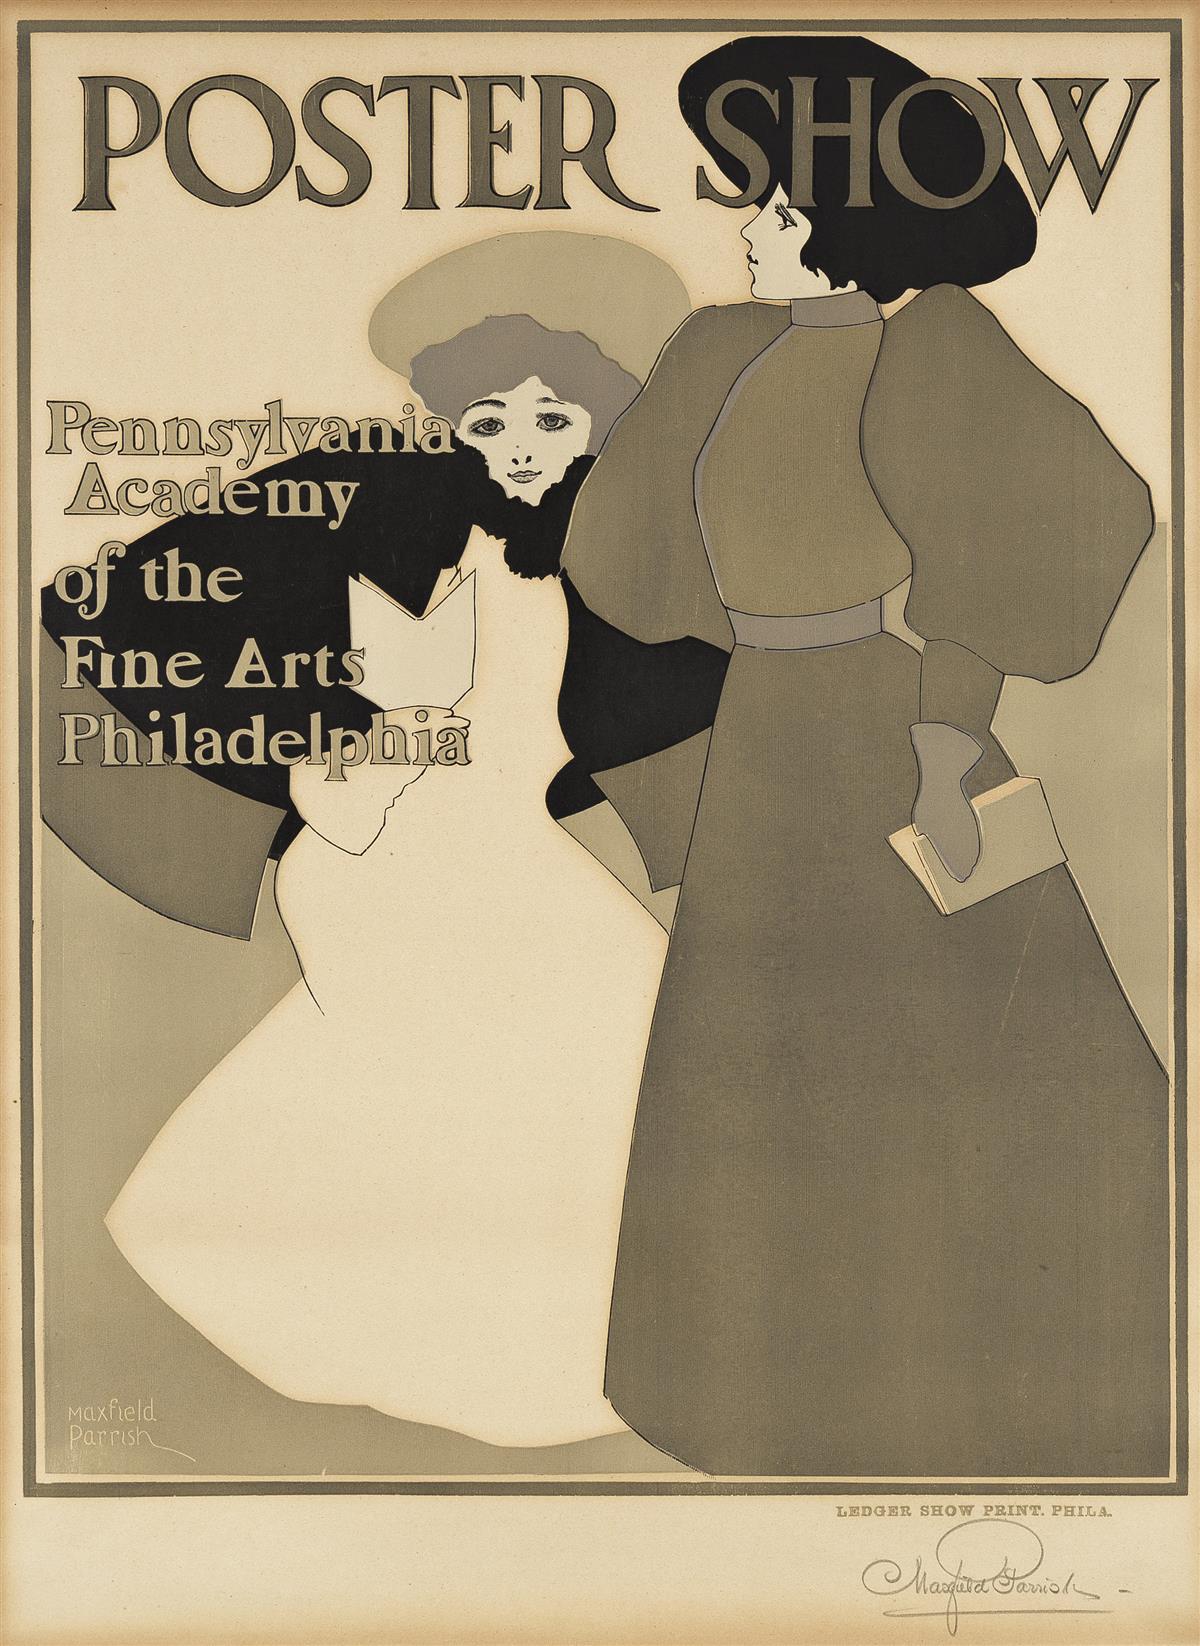 MAXFIELD PARRISH (1870-1966).  POSTER SHOW / PENNSYLVANIA ACADEMY. 1896. 44x28 inches, 111¾x72 cm. Ledger Show Print, Philadelphia.